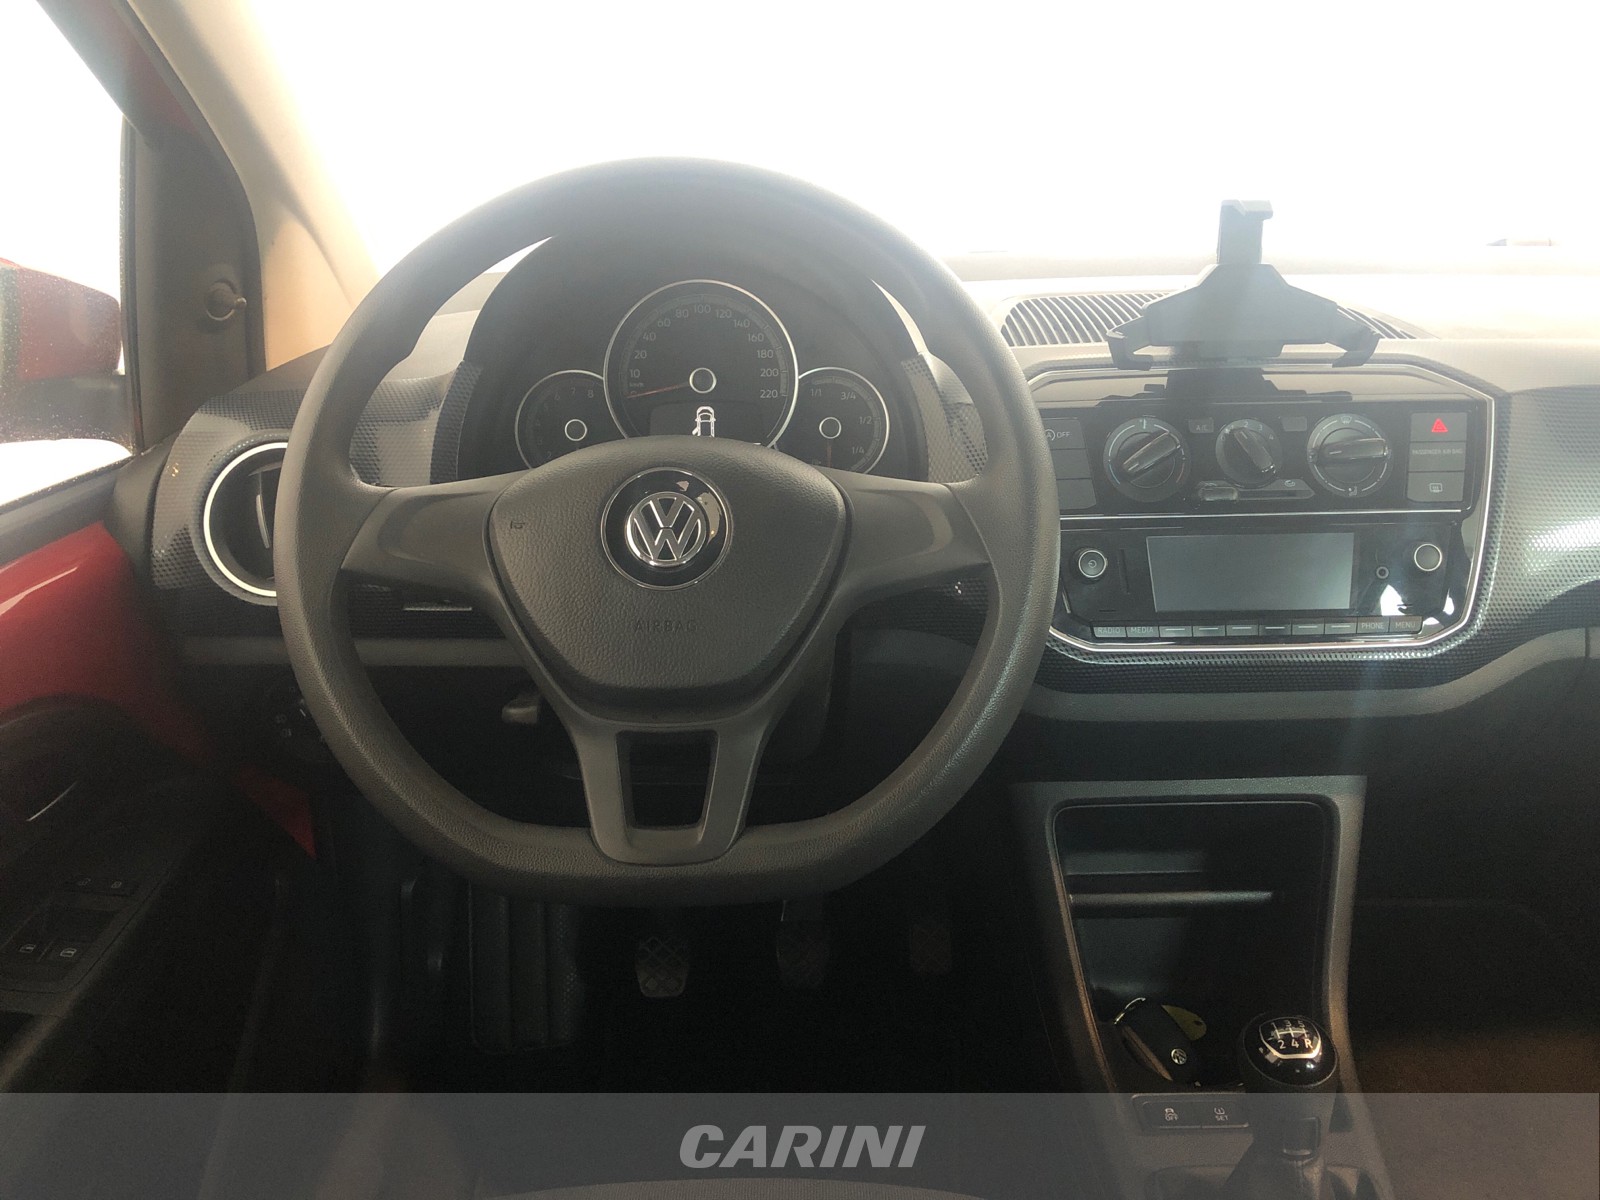 CARINI Volkswagen up!